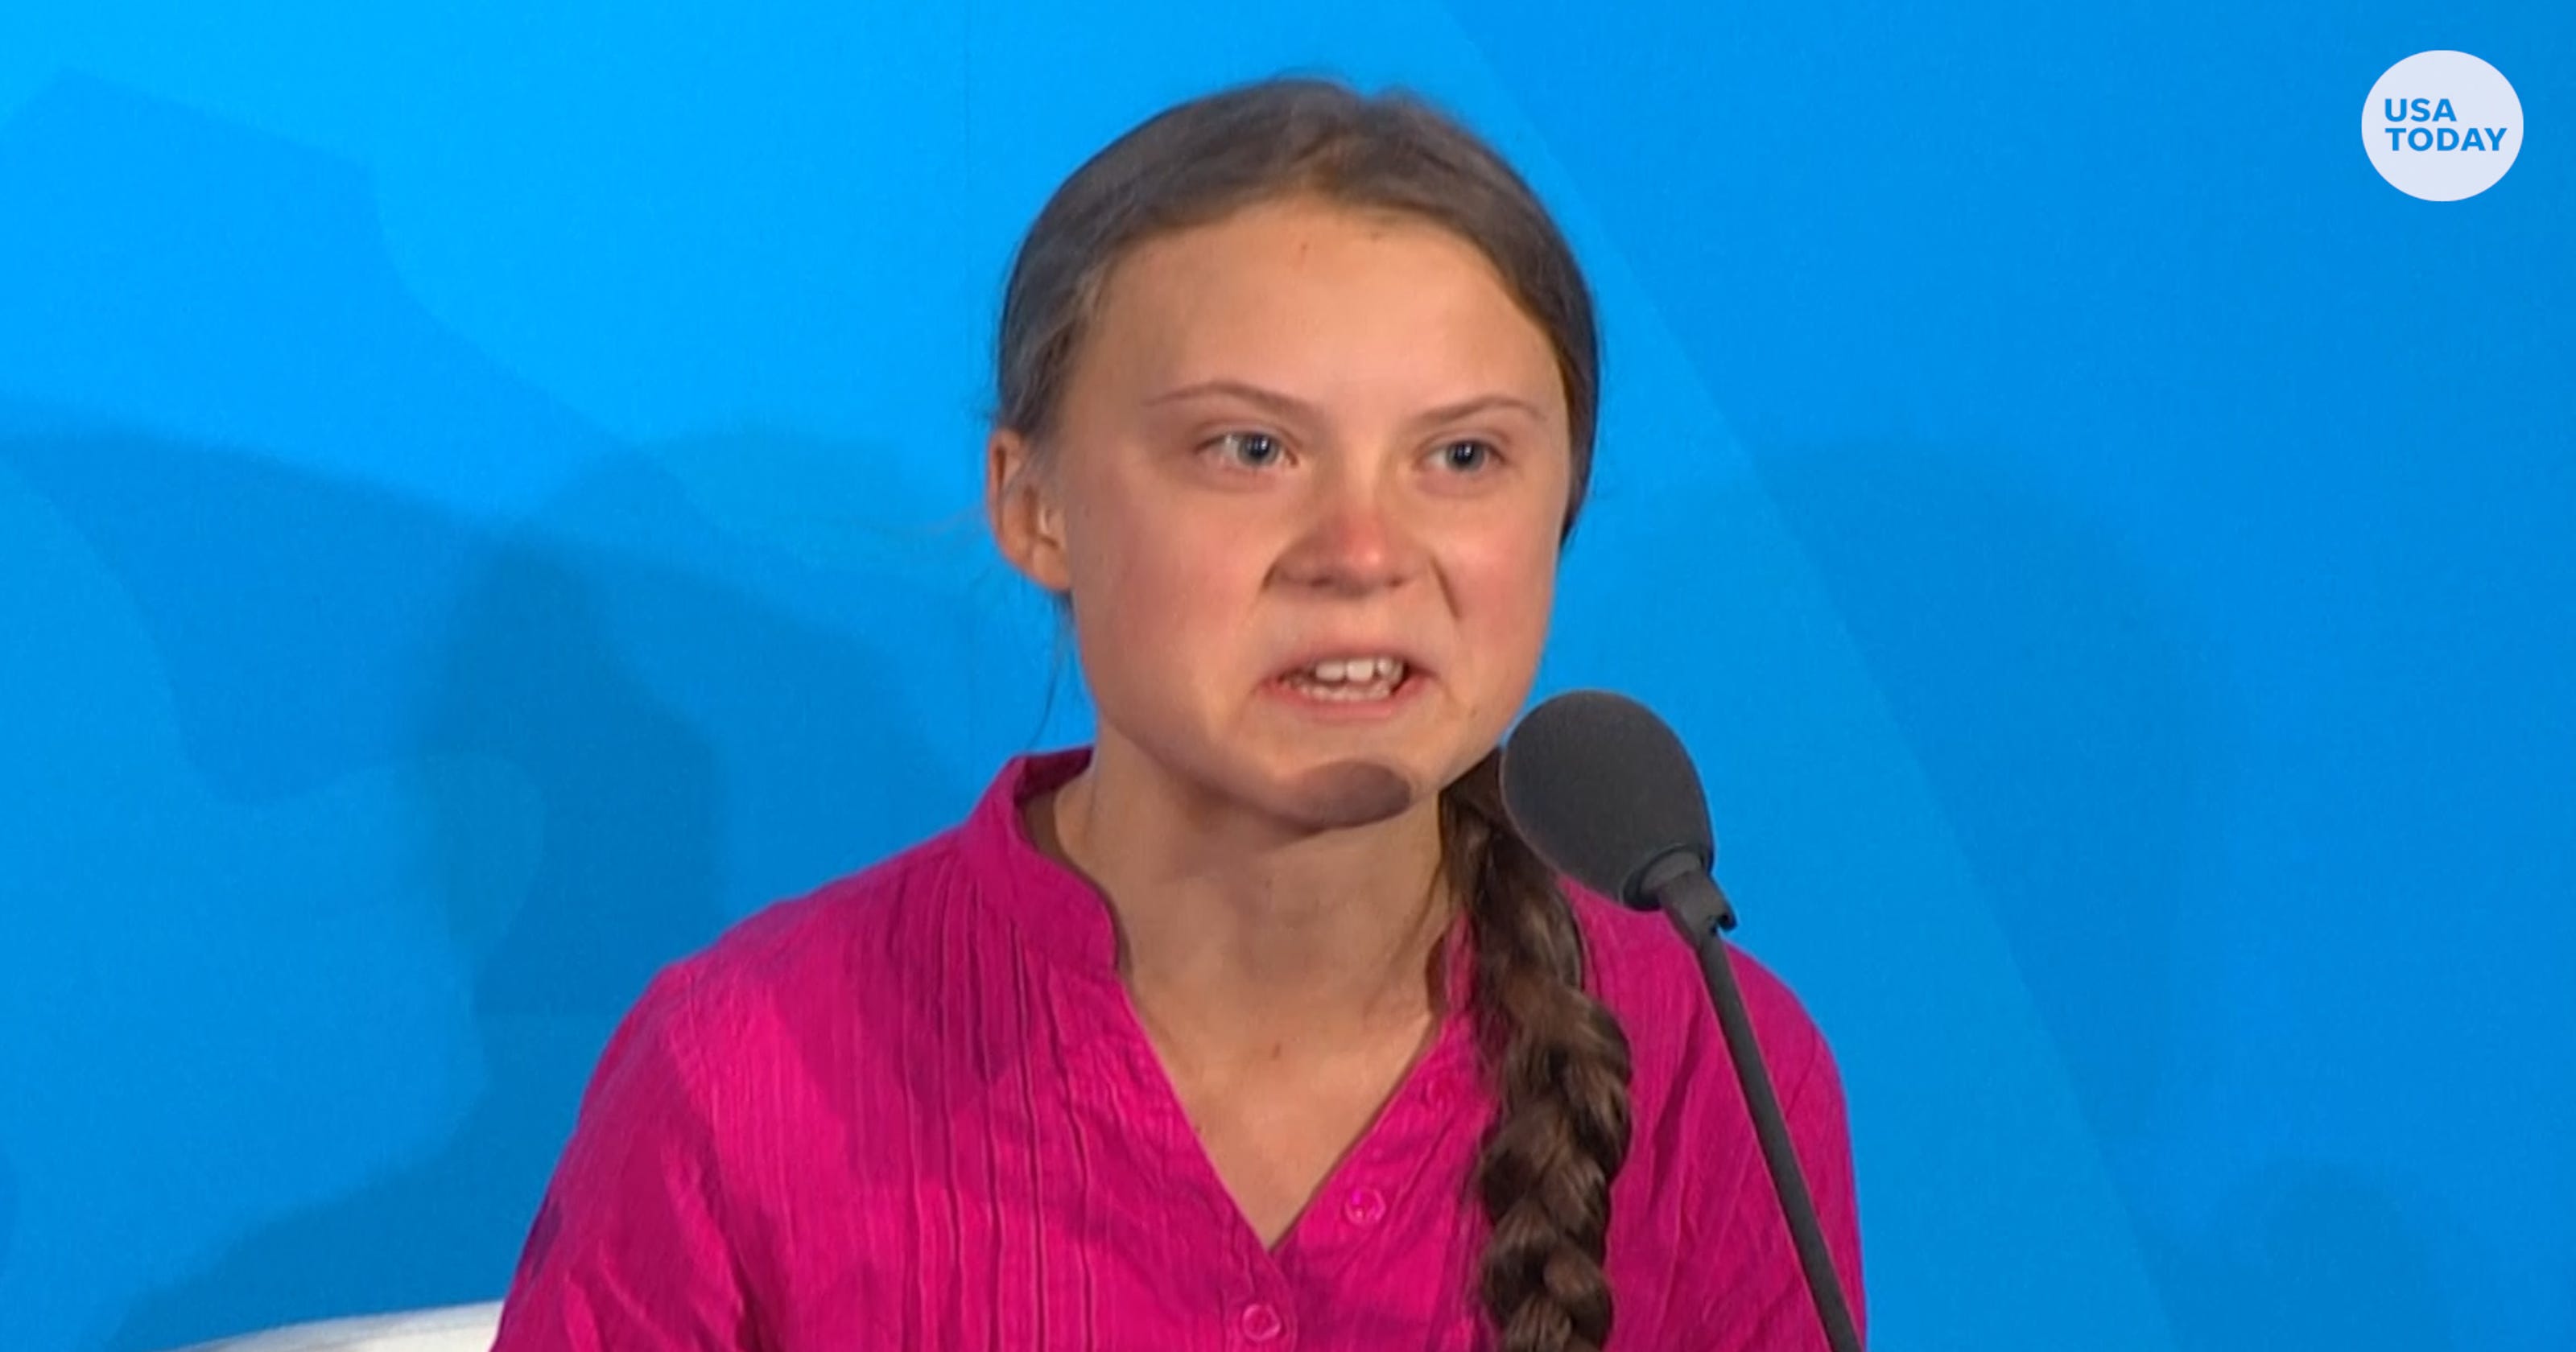 Greta Thunberg's climate change message right to rebuke adults2986 x 1680